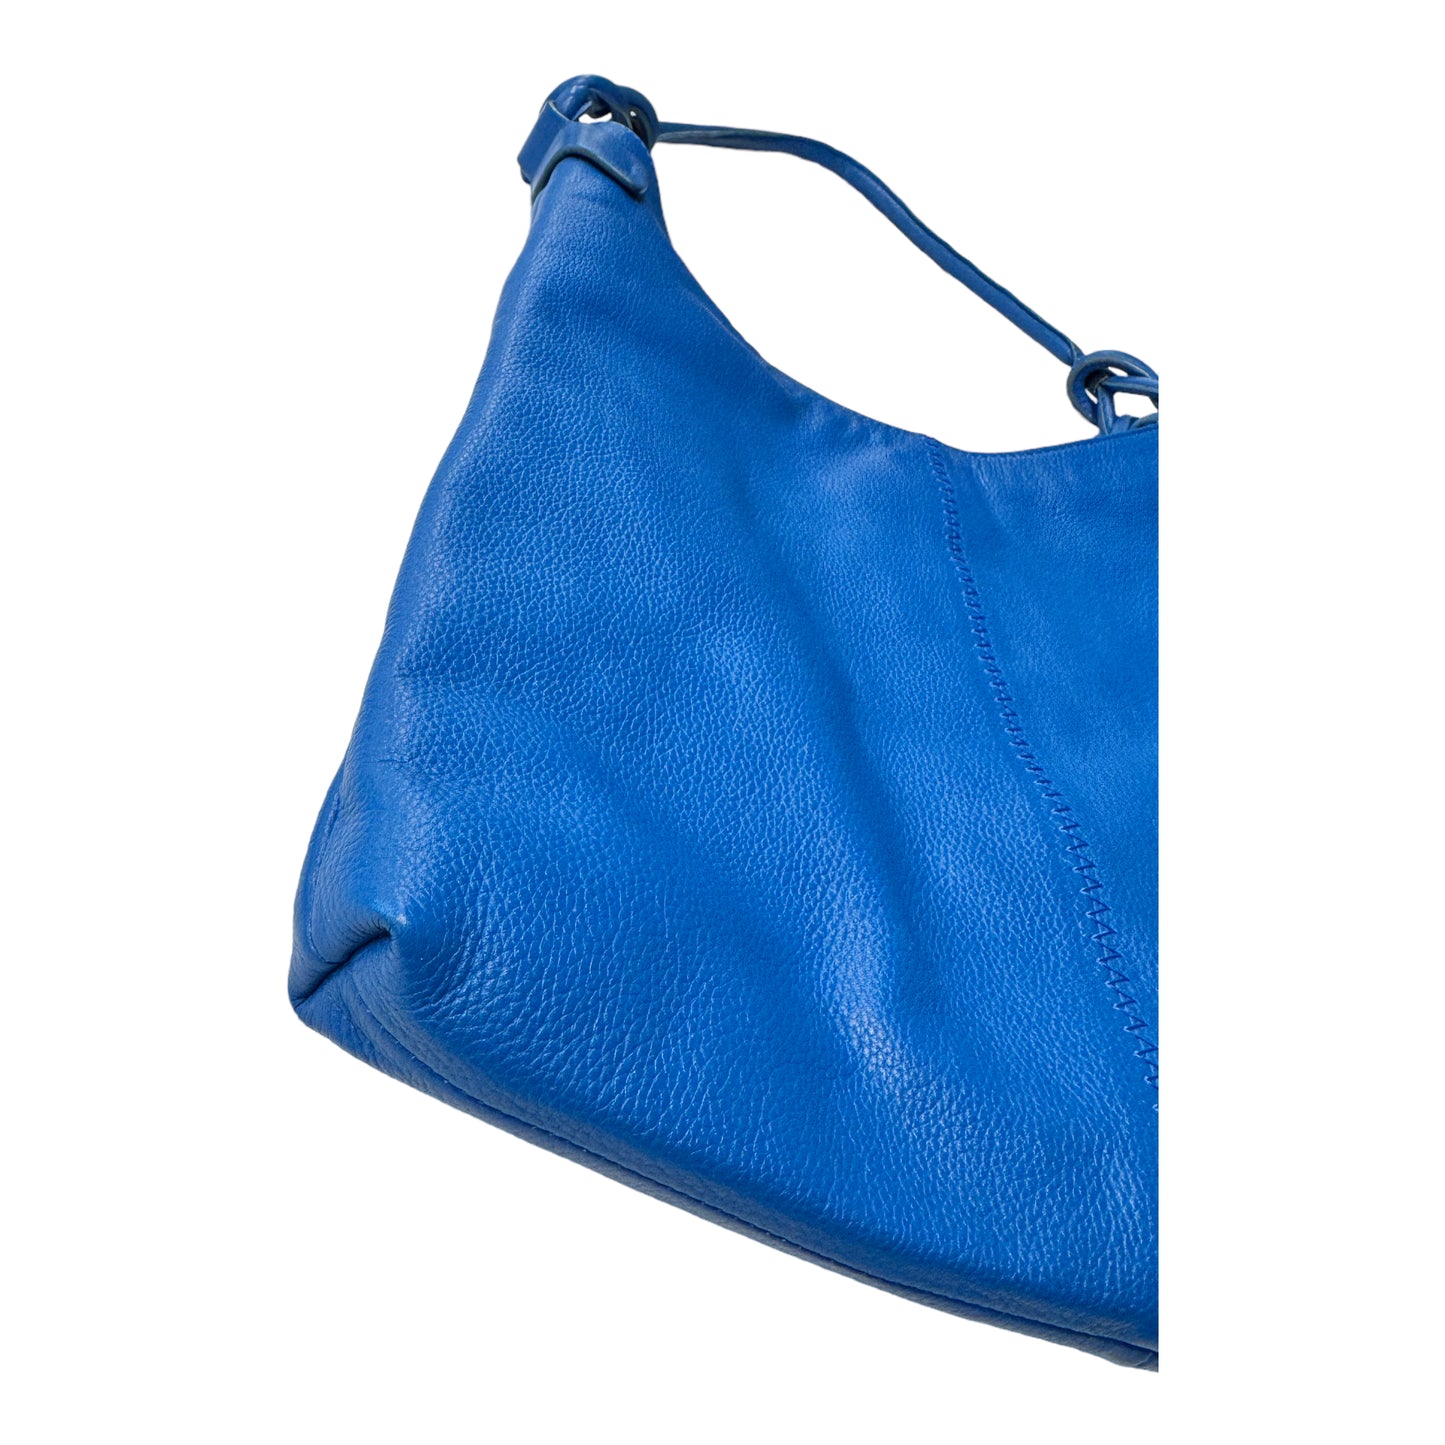 Handbag By Vince Camuto  Size: Medium